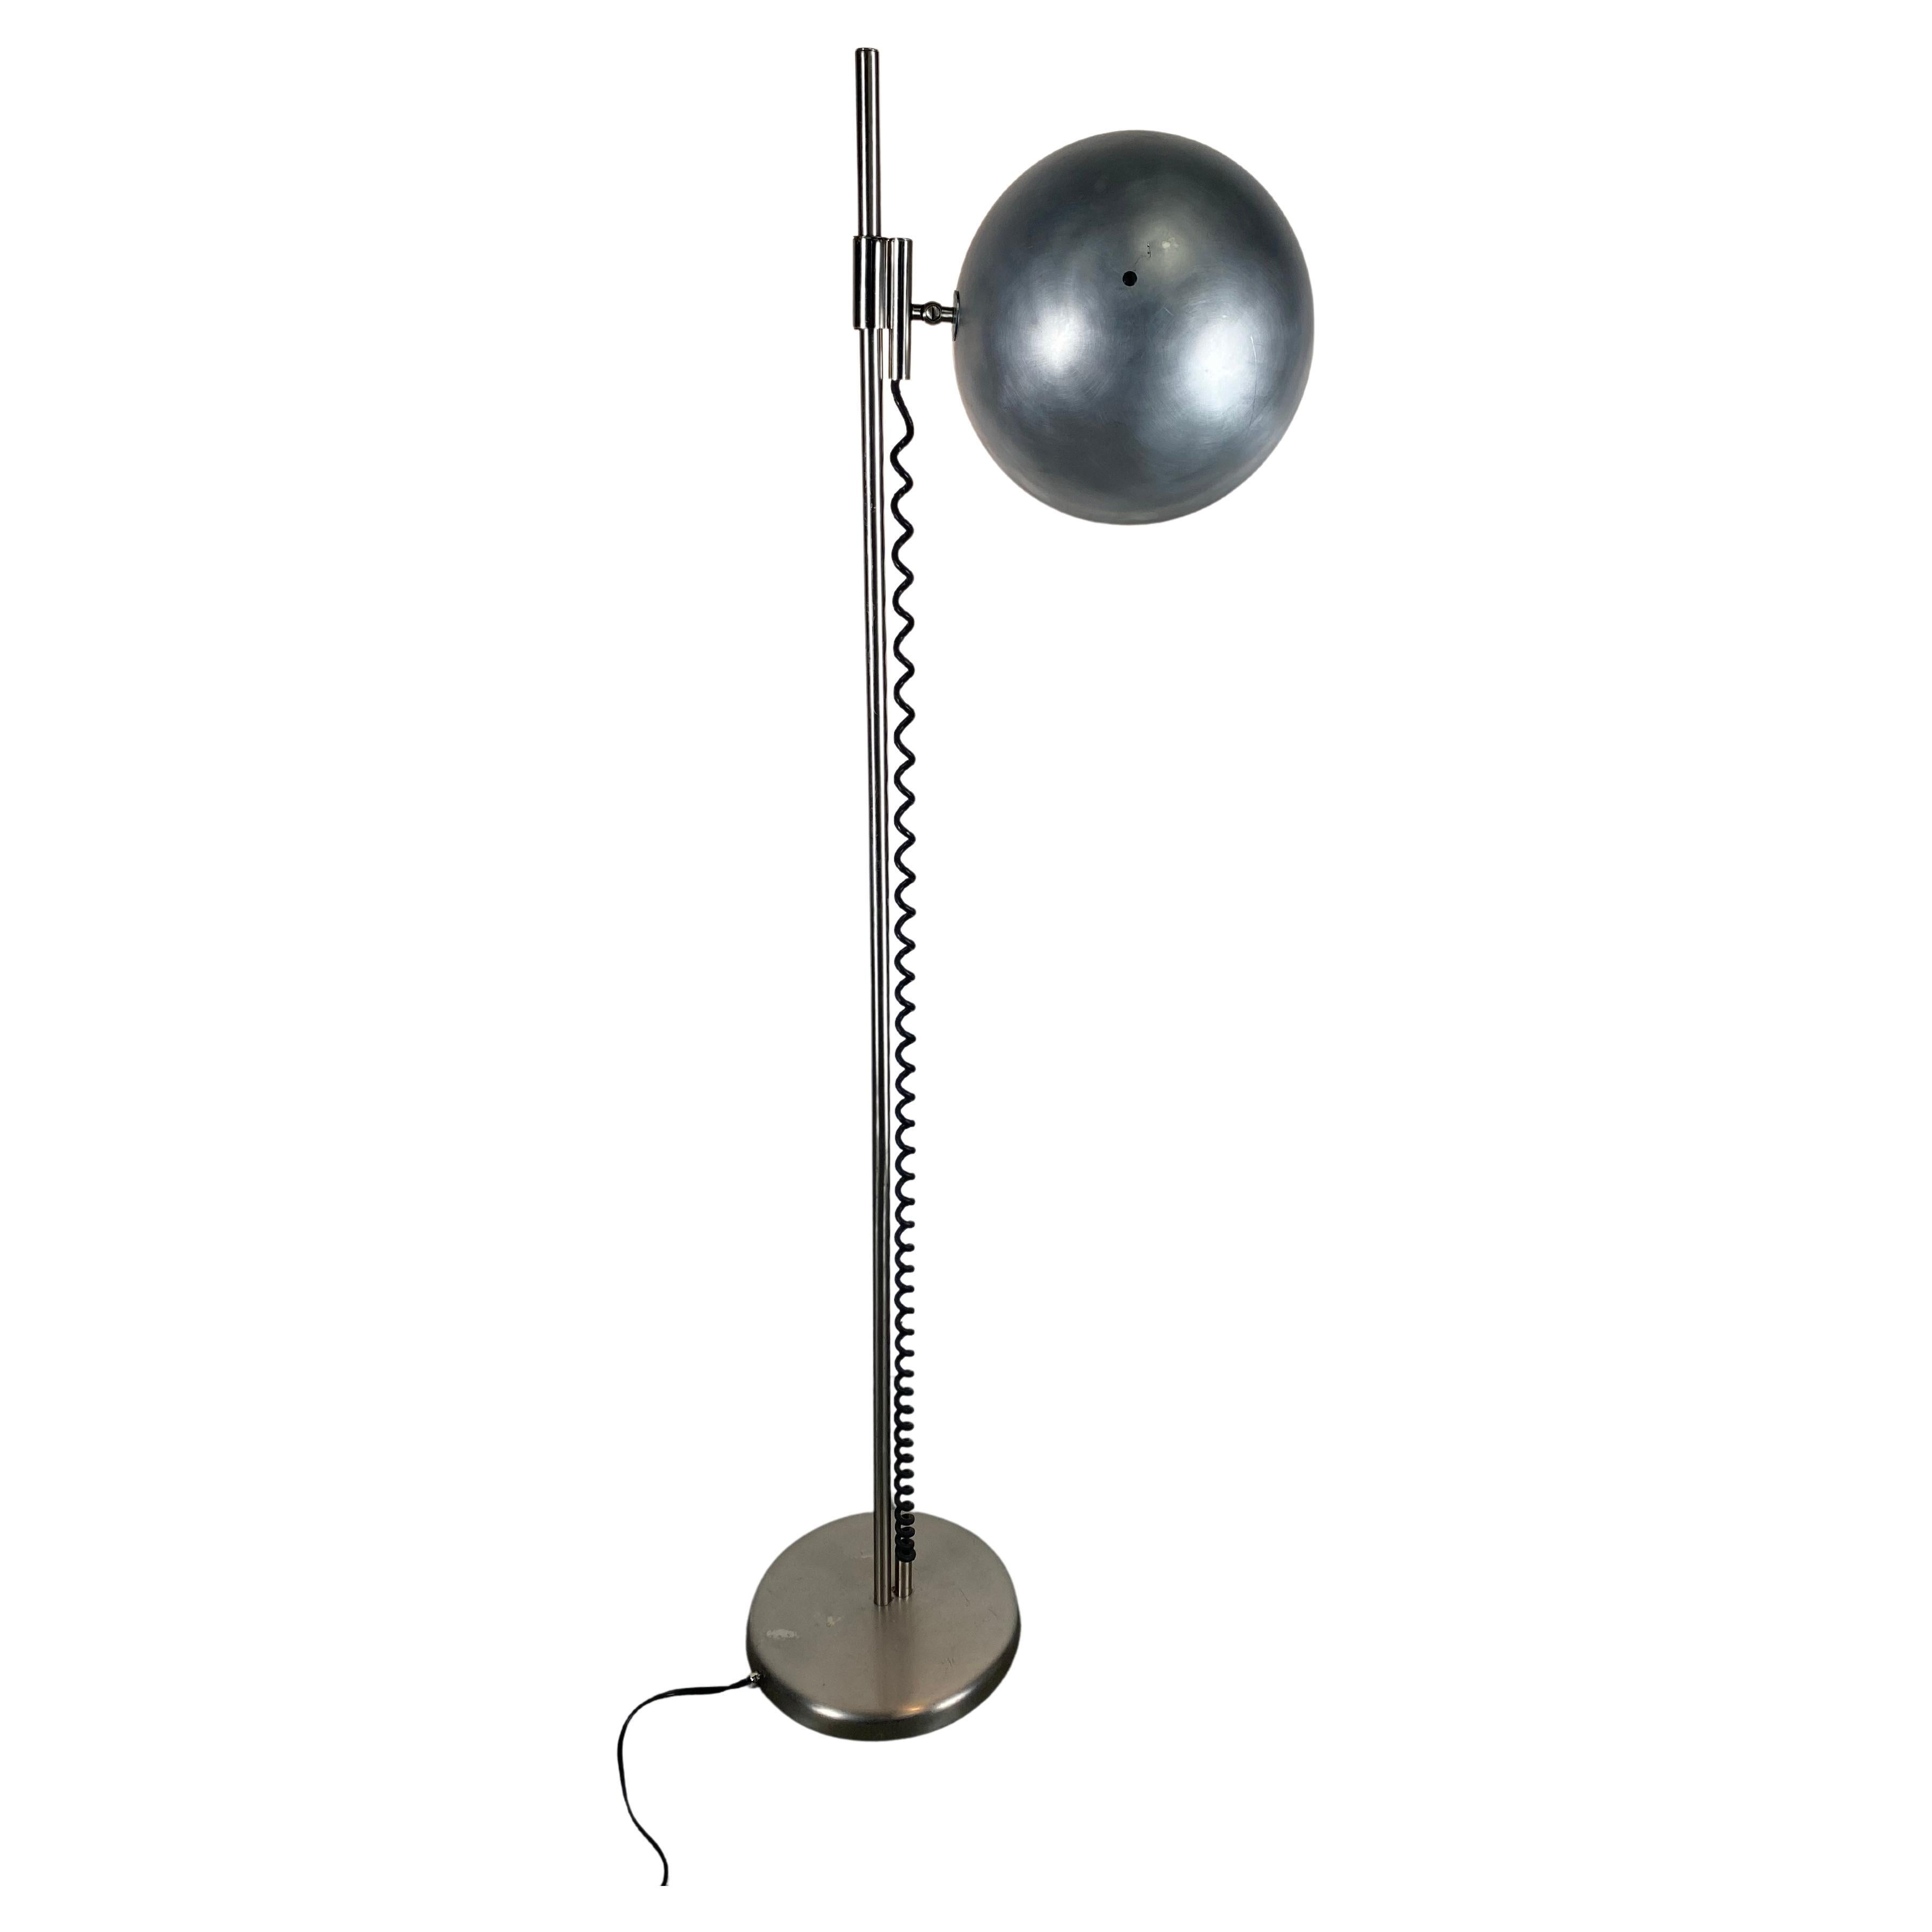 Unusual 1970s Bauhaus Inspired Adjustable Floor Lamp, Spun Aluminum Shade  For Sale at 1stDibs